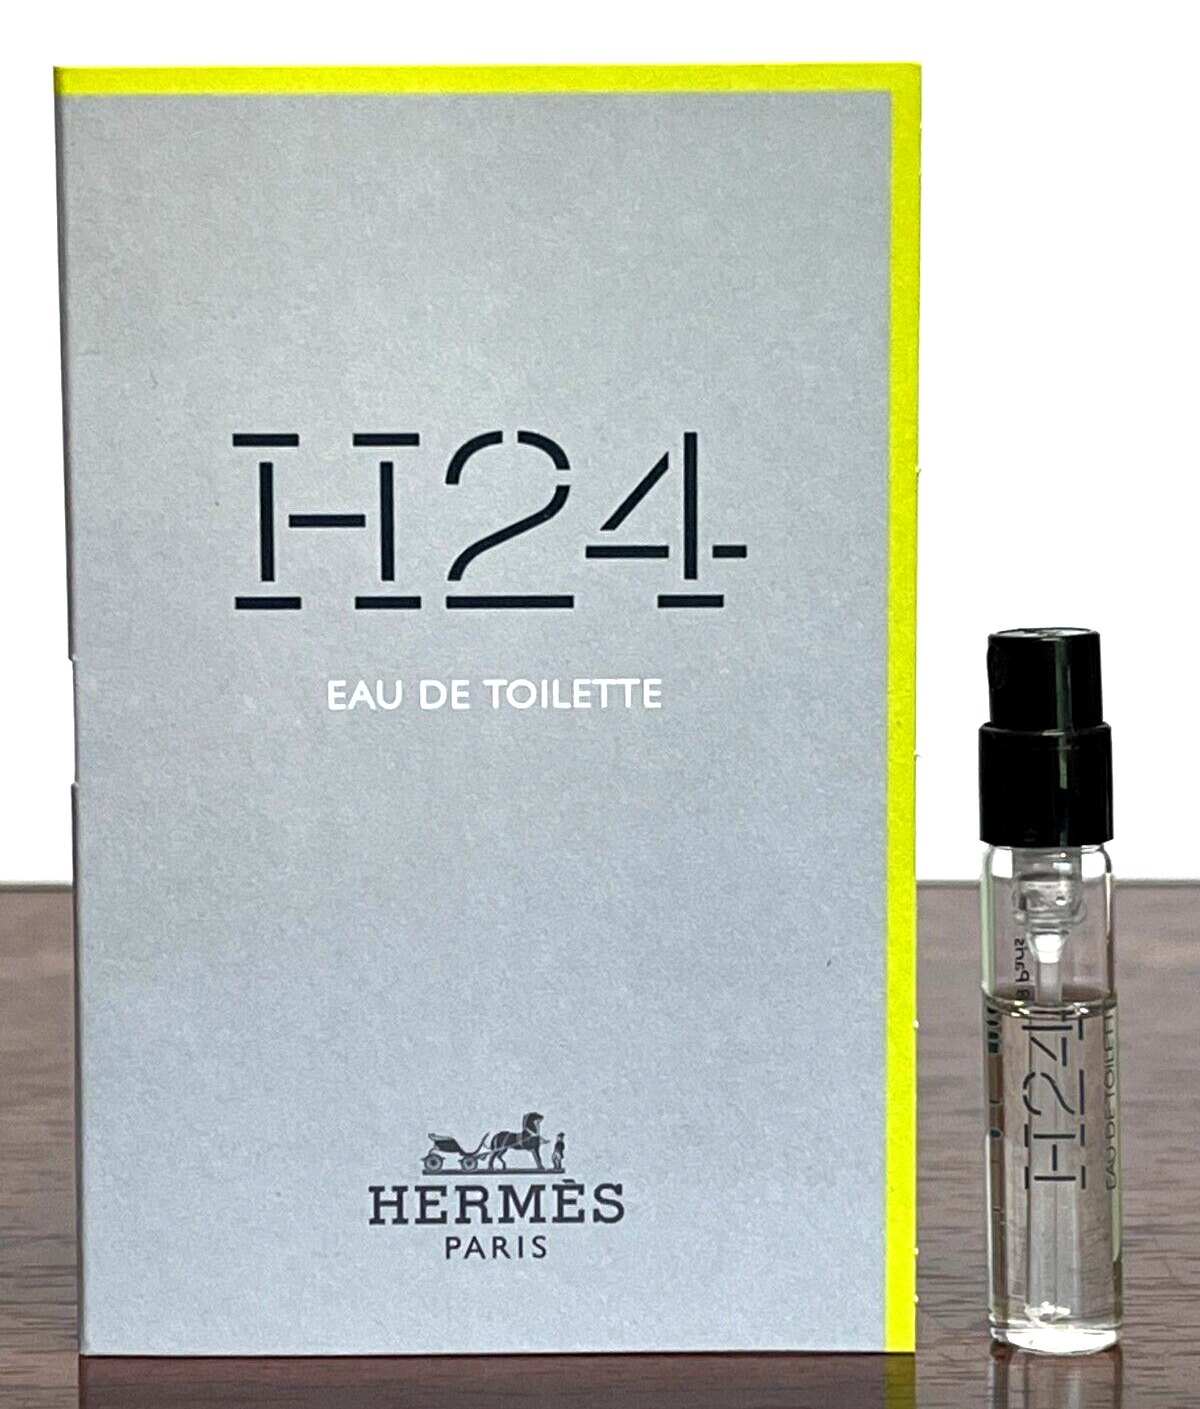 H24 By HERMES 0.06z / 2ml EDT Spray Sample NEW ON CARD